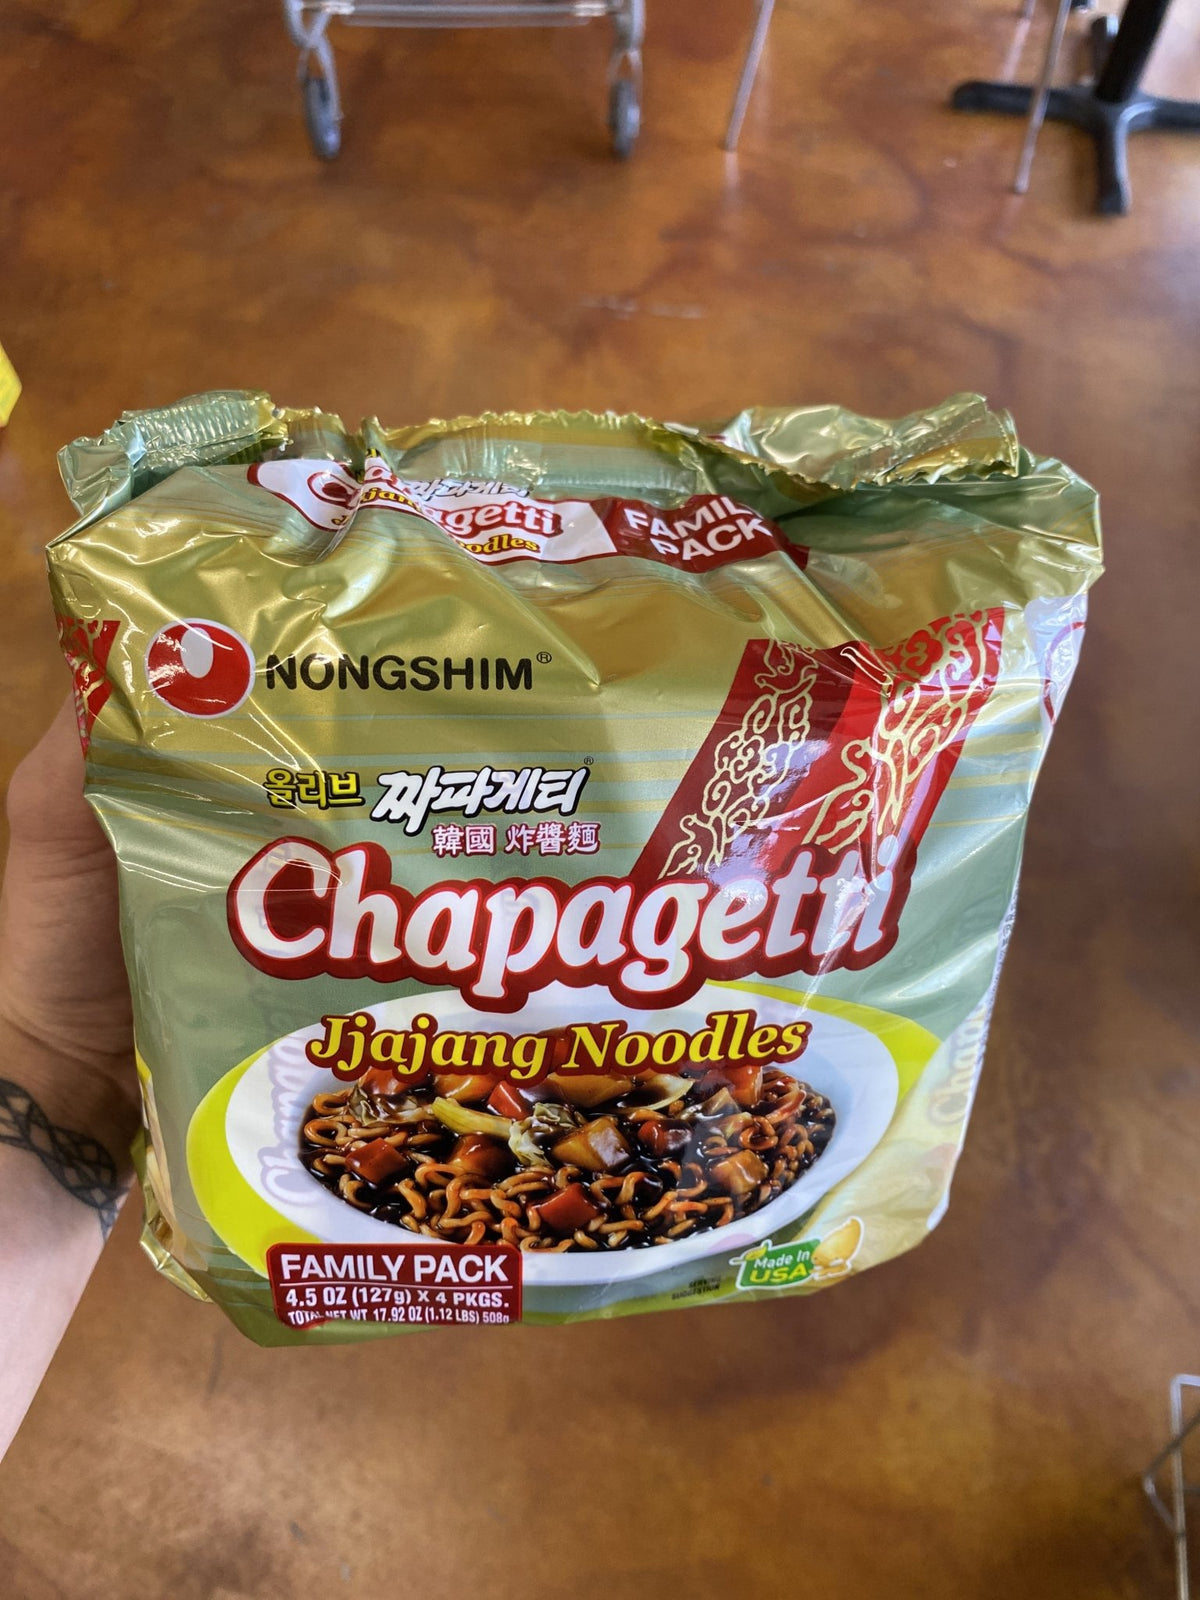 Nongshim - Chapagetti Jjajang Noodles Family Pack